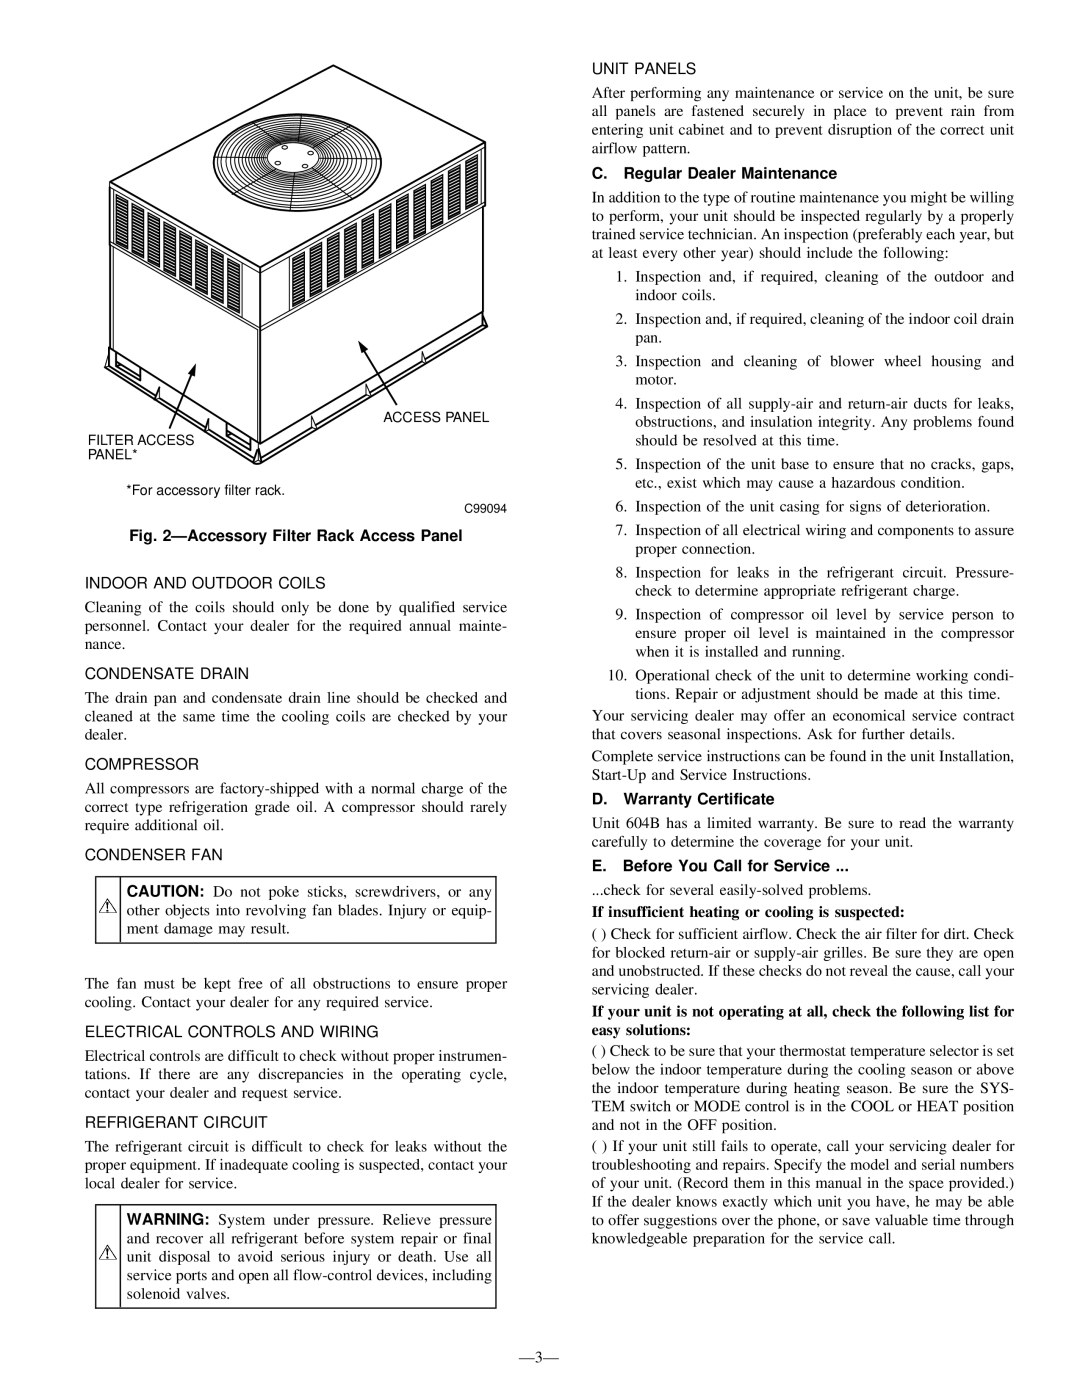 Bryant 604B instruction manual ÐAccessory Filter Rack Access Panel, C.Regular Dealer Maintenance, D.Warranty Certificate 